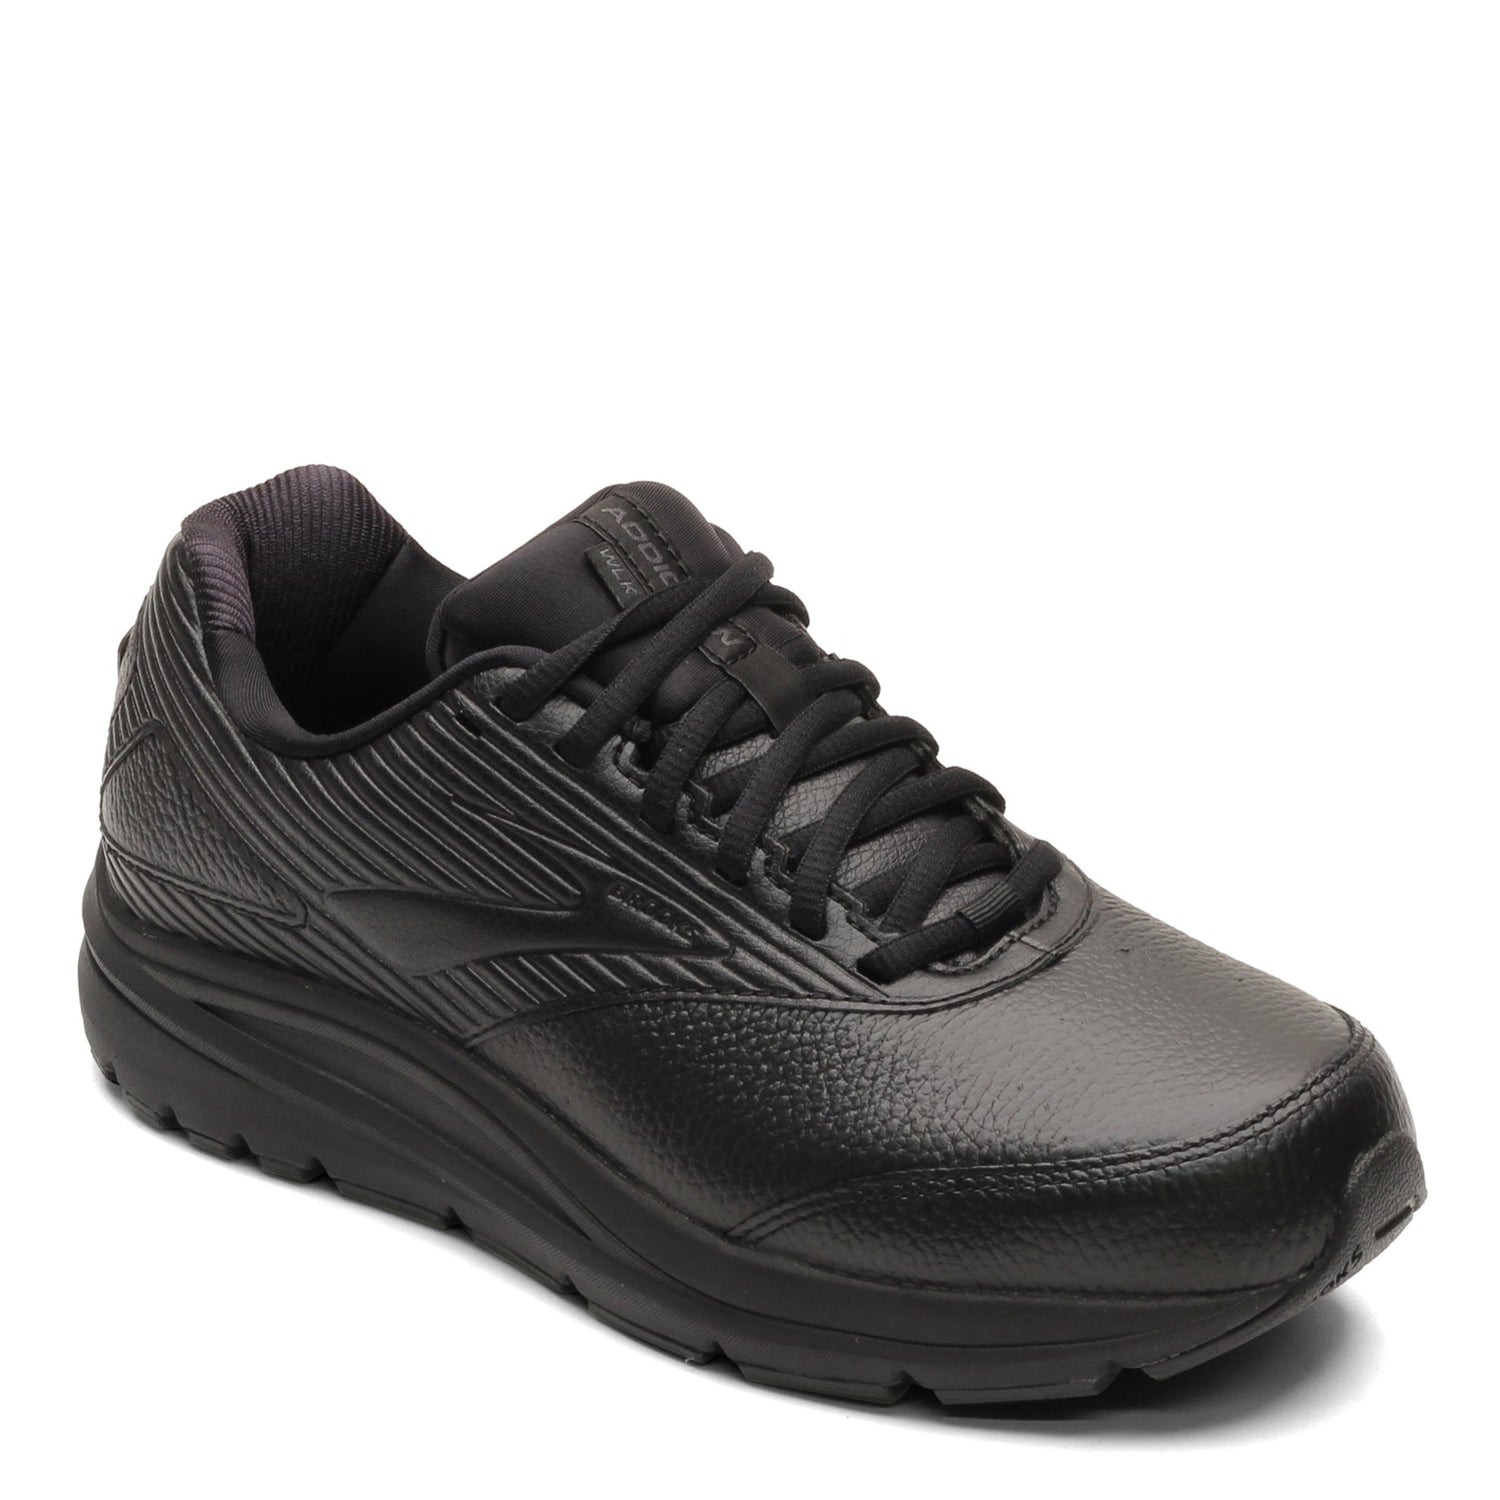 Peltz Shoes  Men's Brooks Addiction Walker 2 Walking Shoe - Extra Wide Black/Black 110318 4E 072